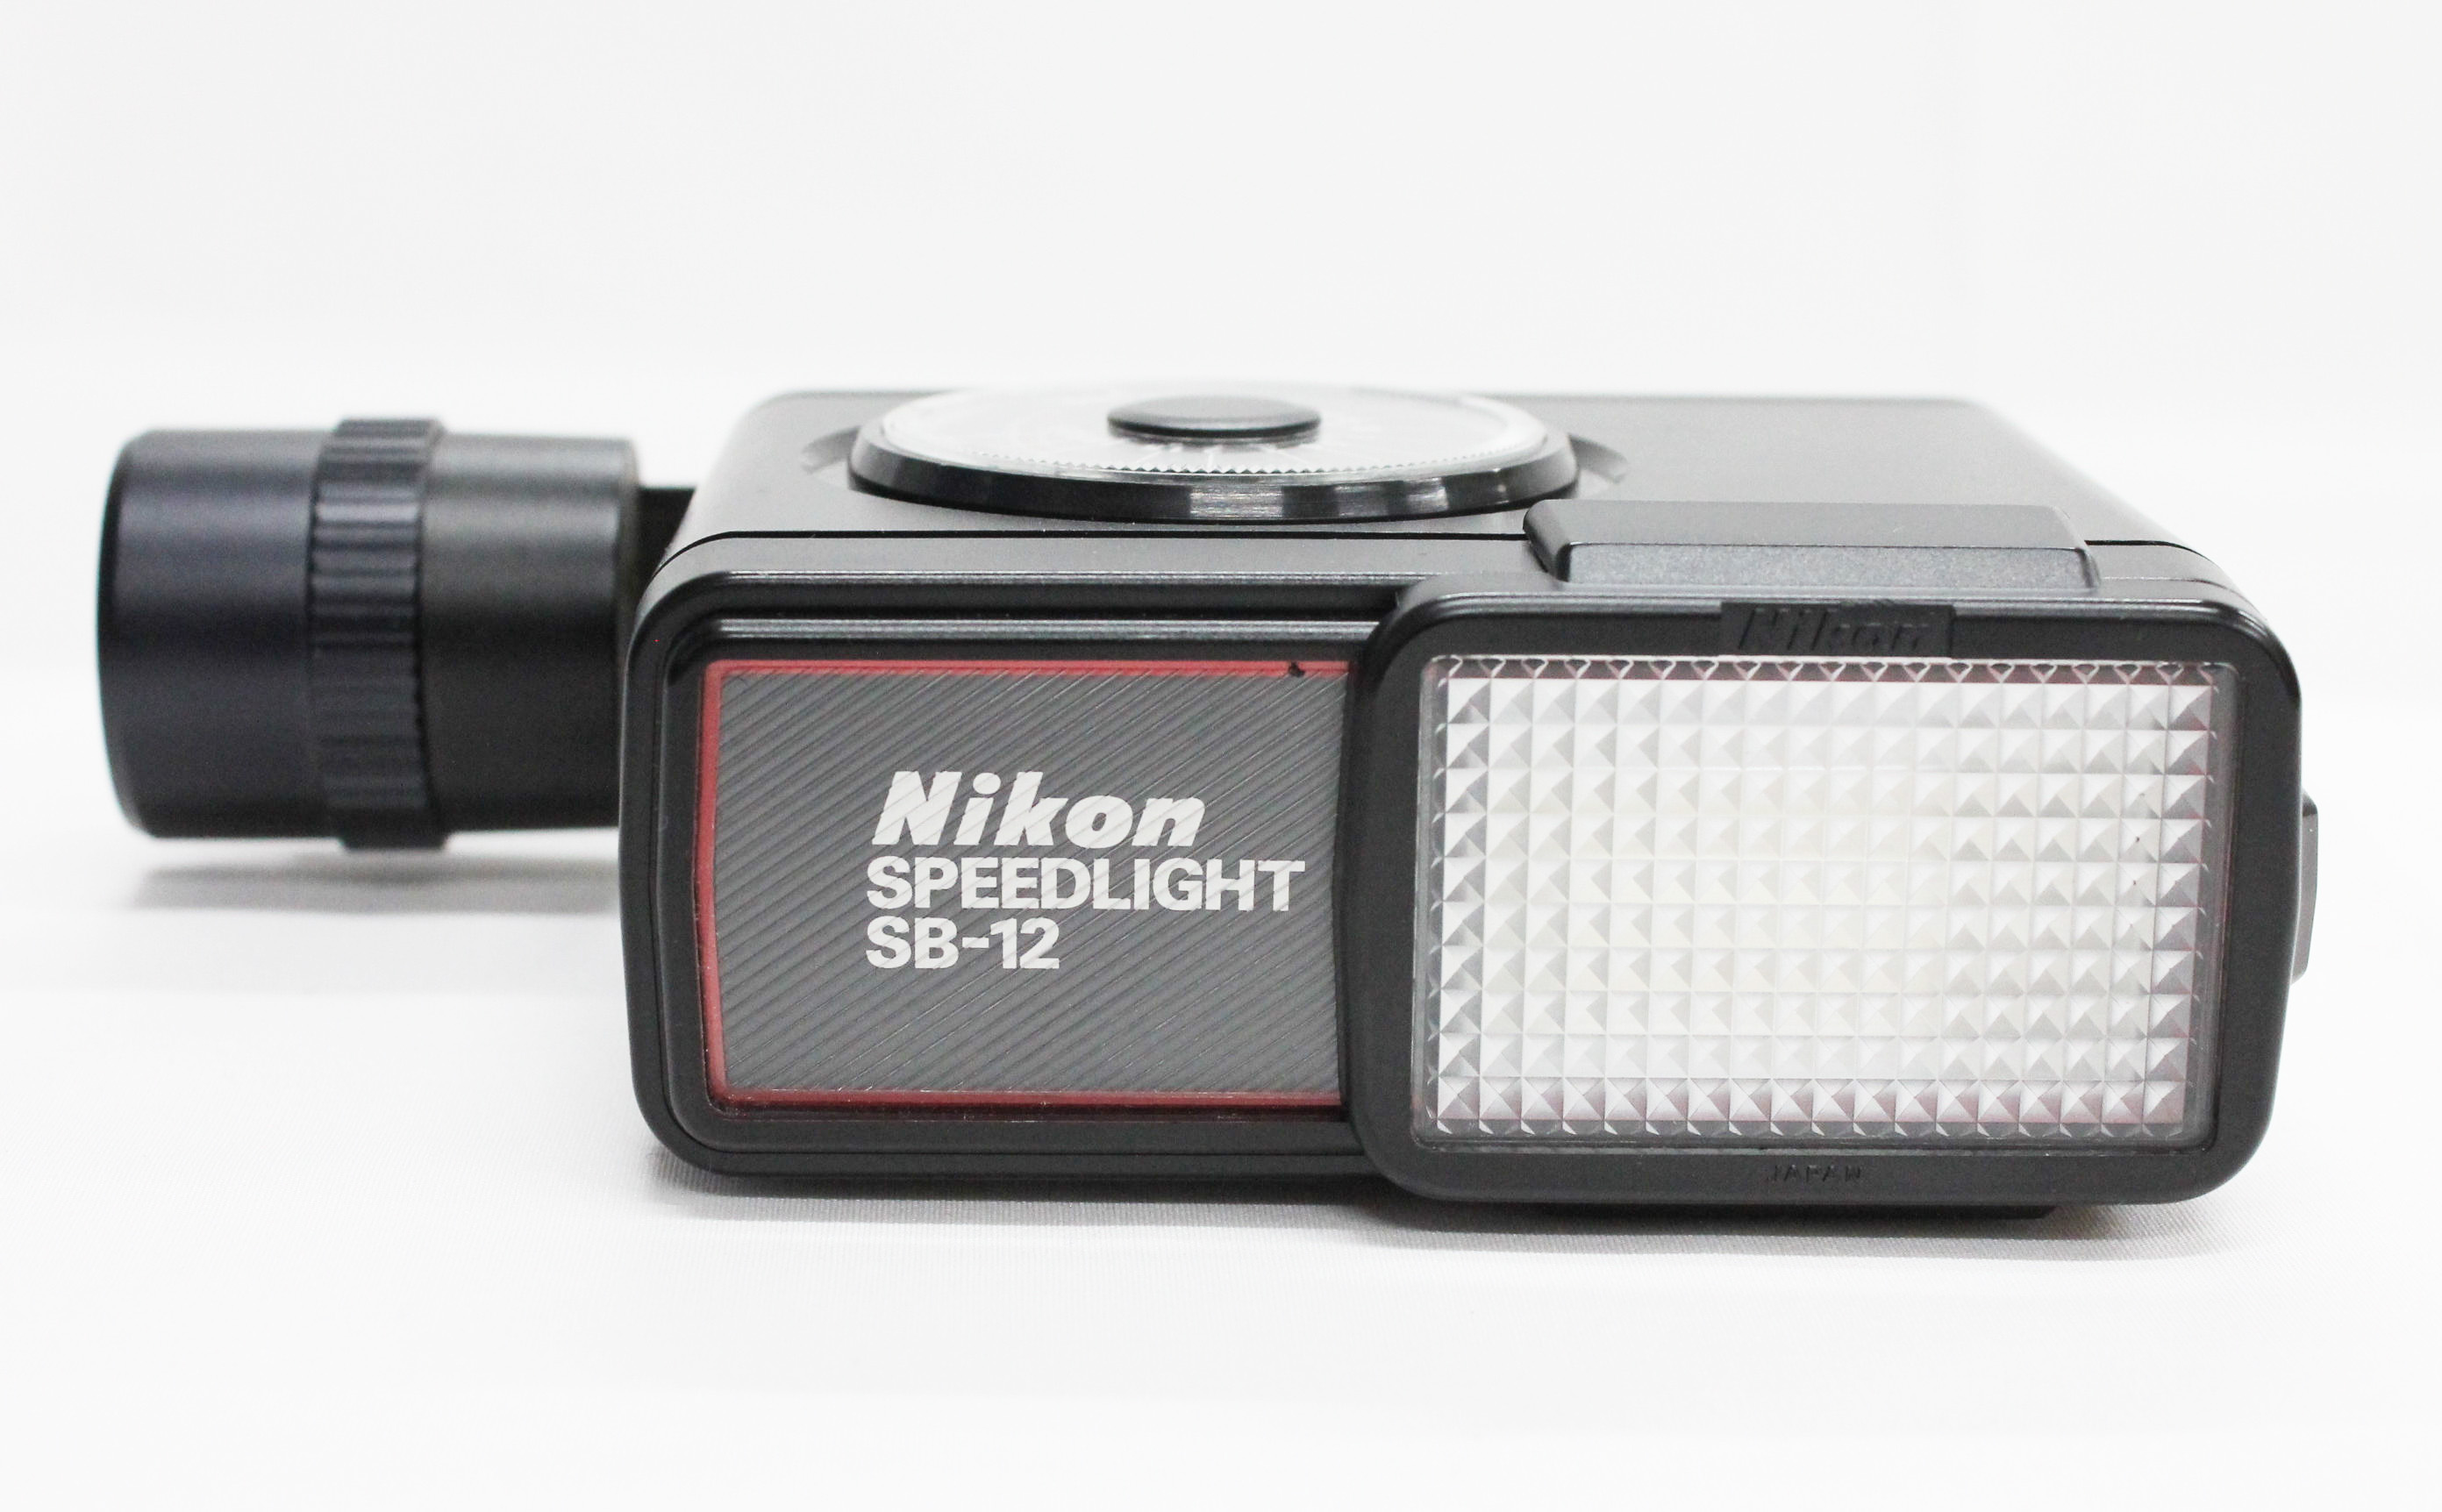  Nikon Speedlight SB-12 Shoe Mount Flash from Japan Photo 0